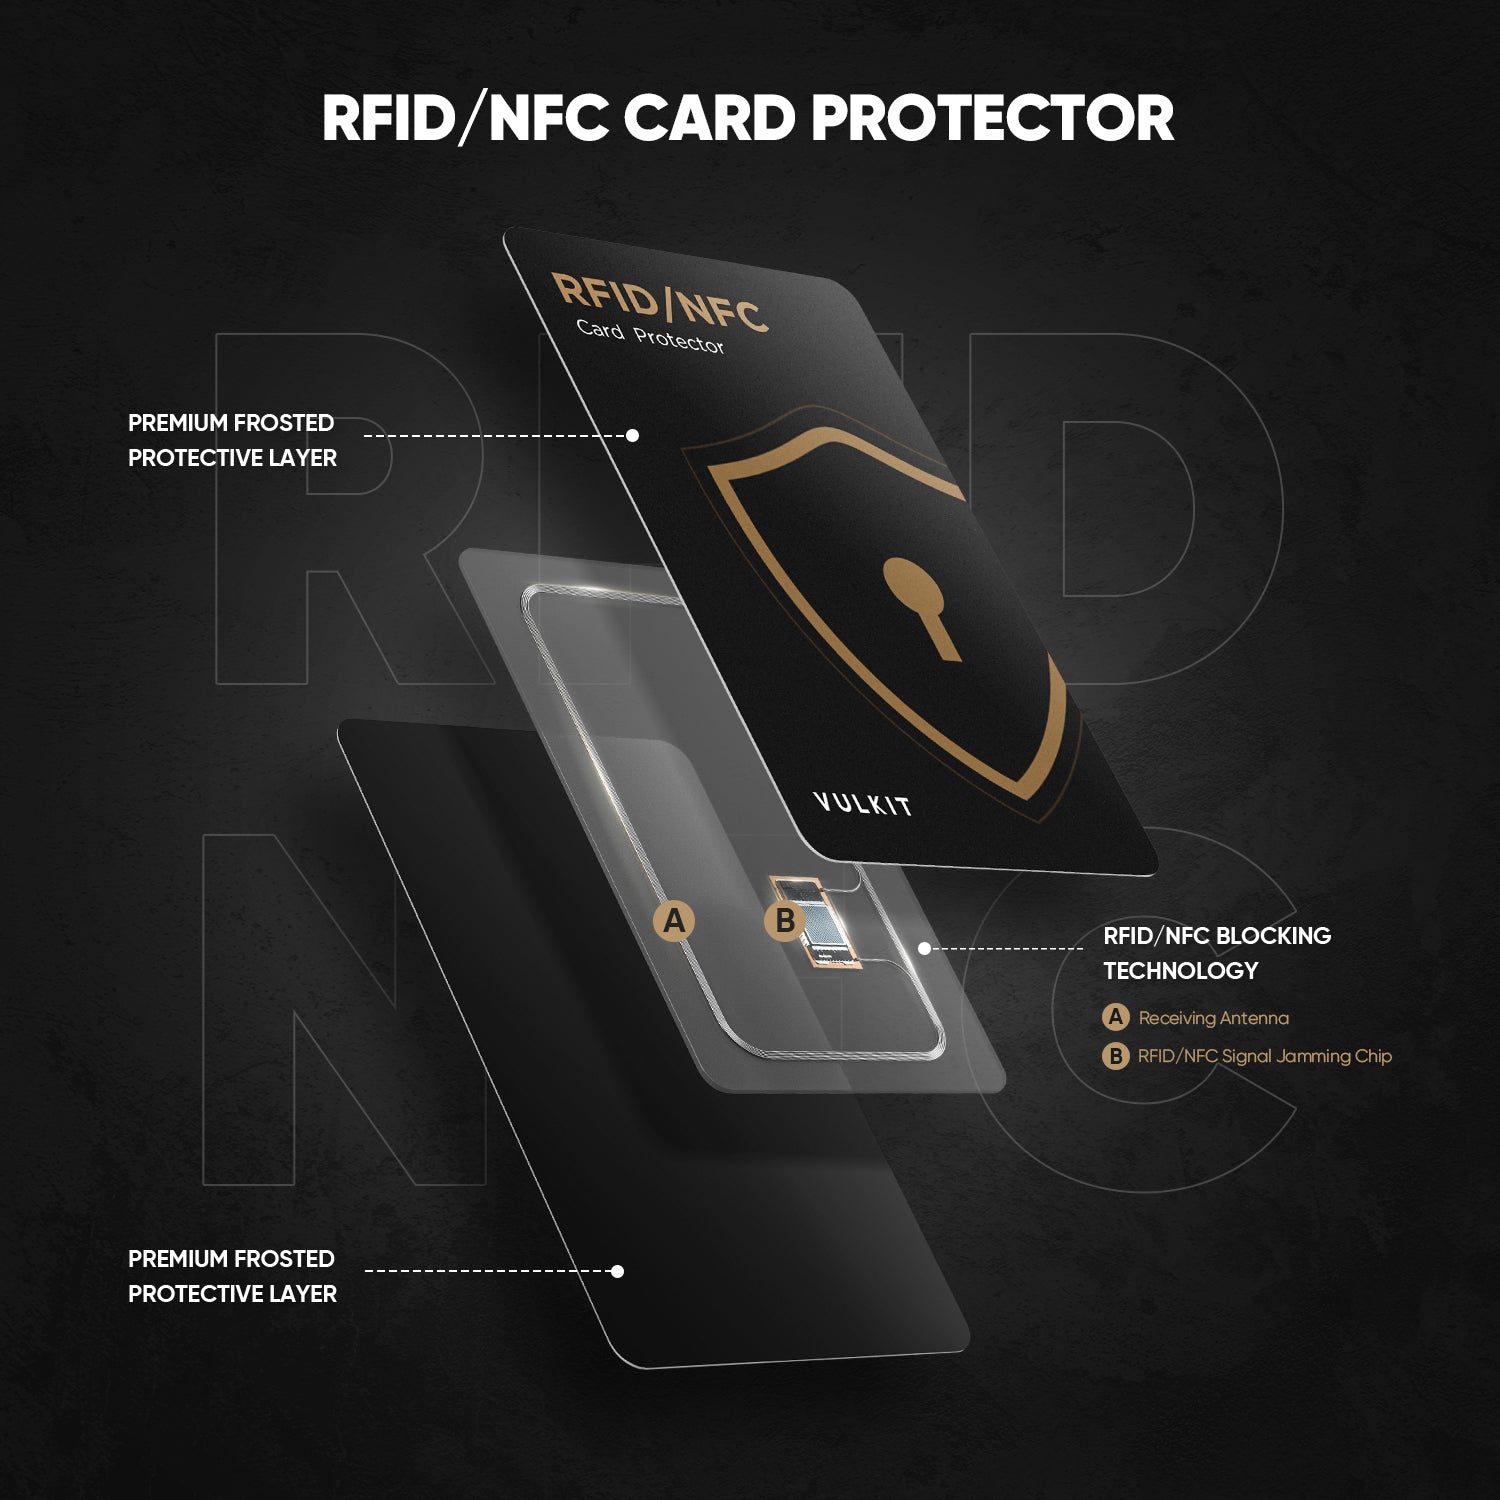 RFID & NFC Blocking Card